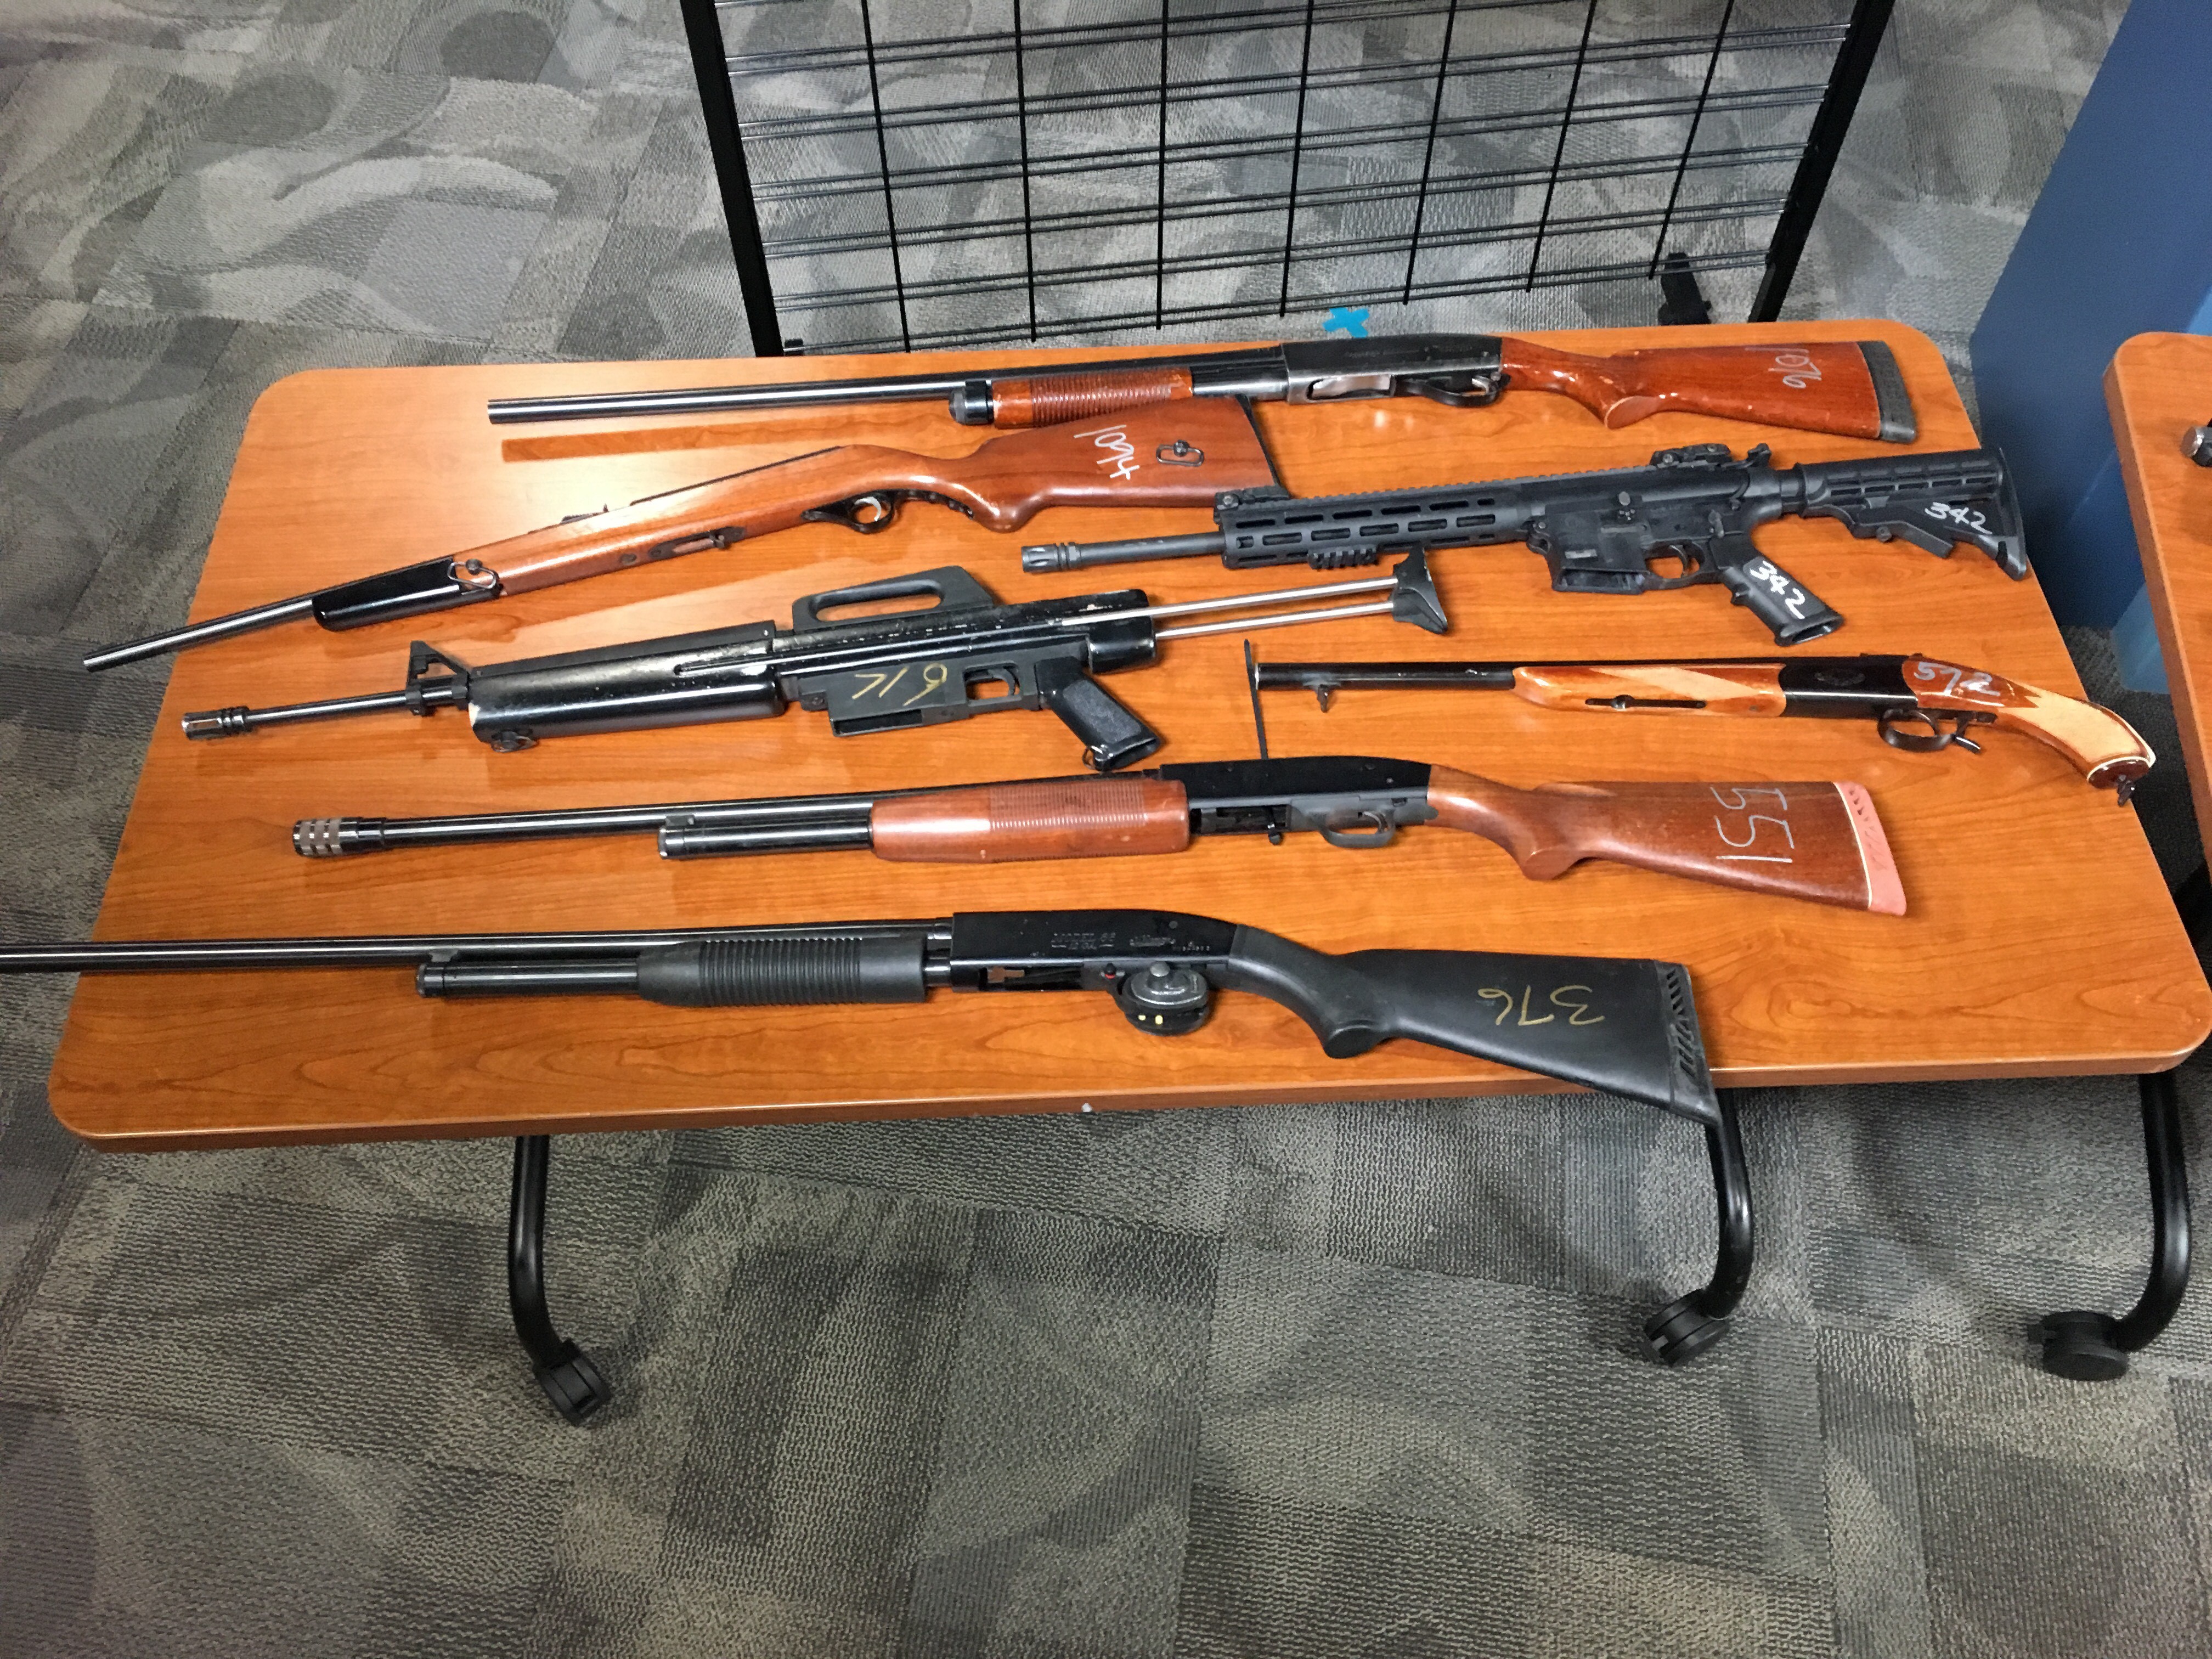 Over 3,100 guns surrendered to police during gun buyback program